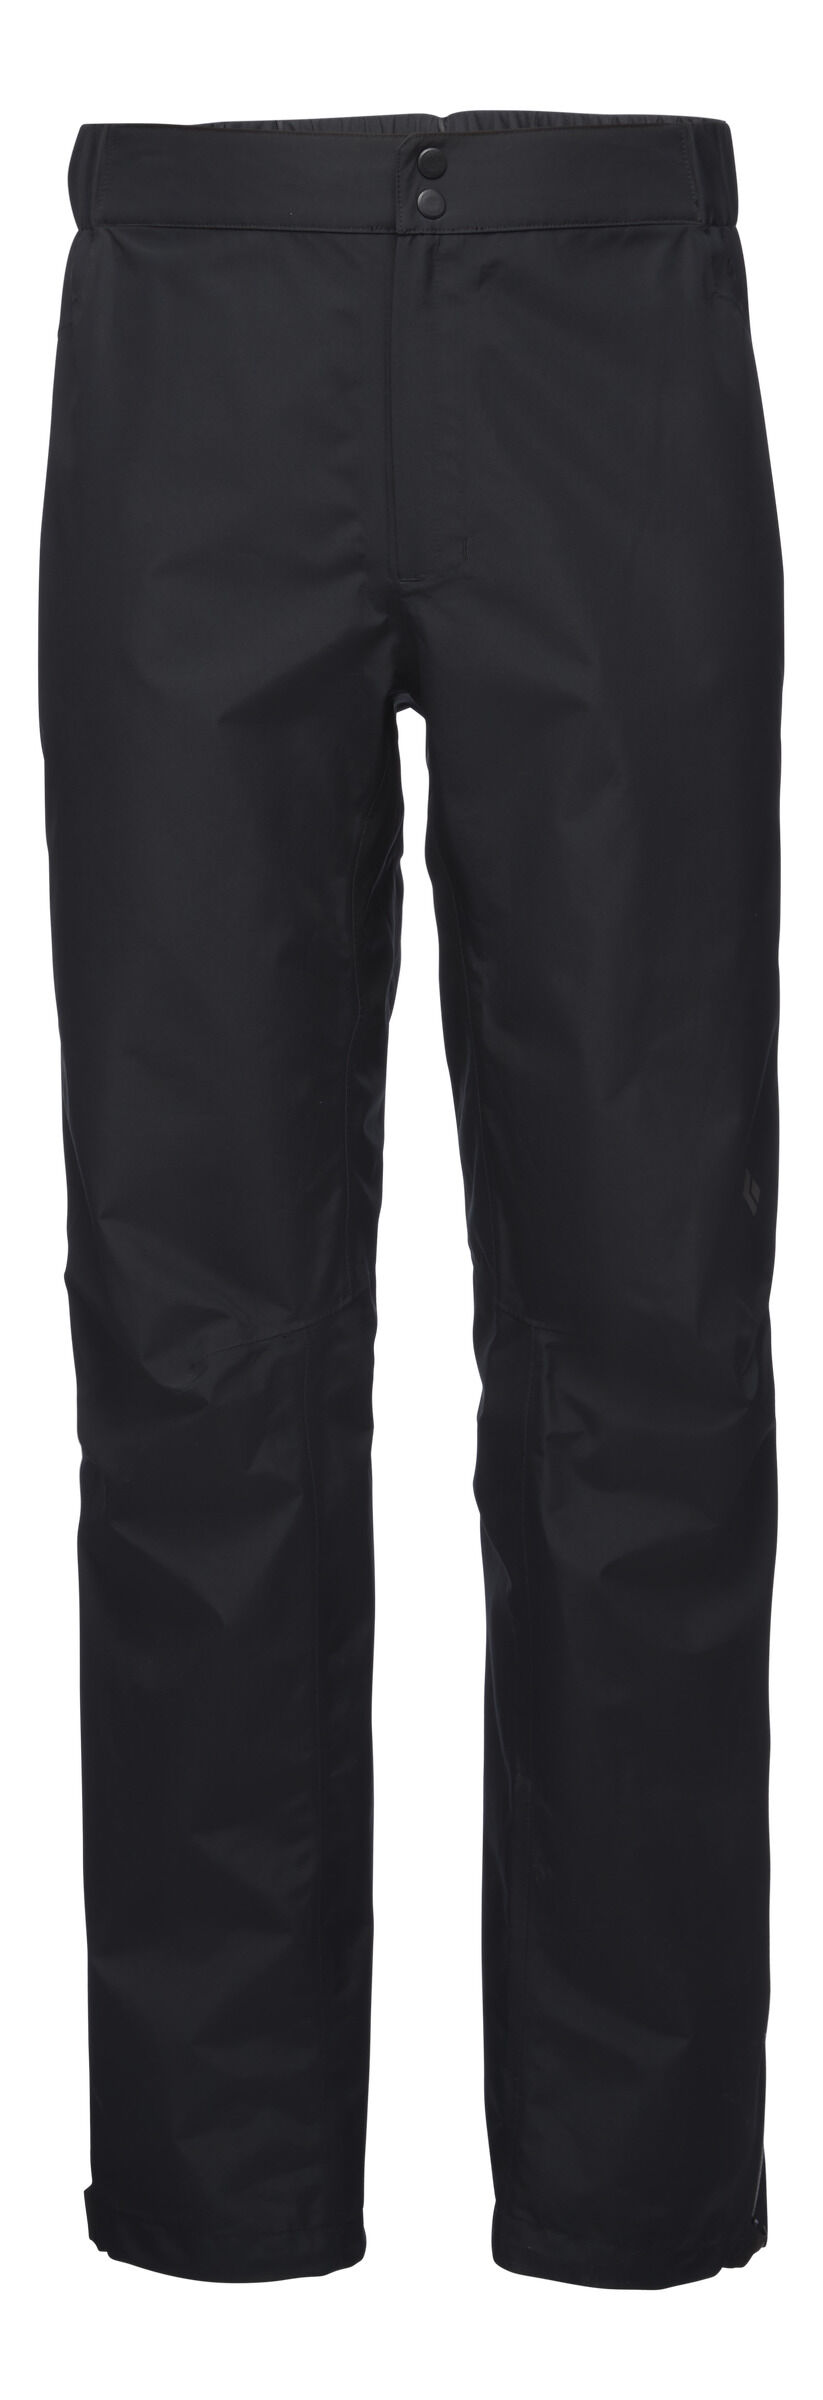 Black Diamond - Liquid Point Pants - Pantaloni impermeabili - Uomo